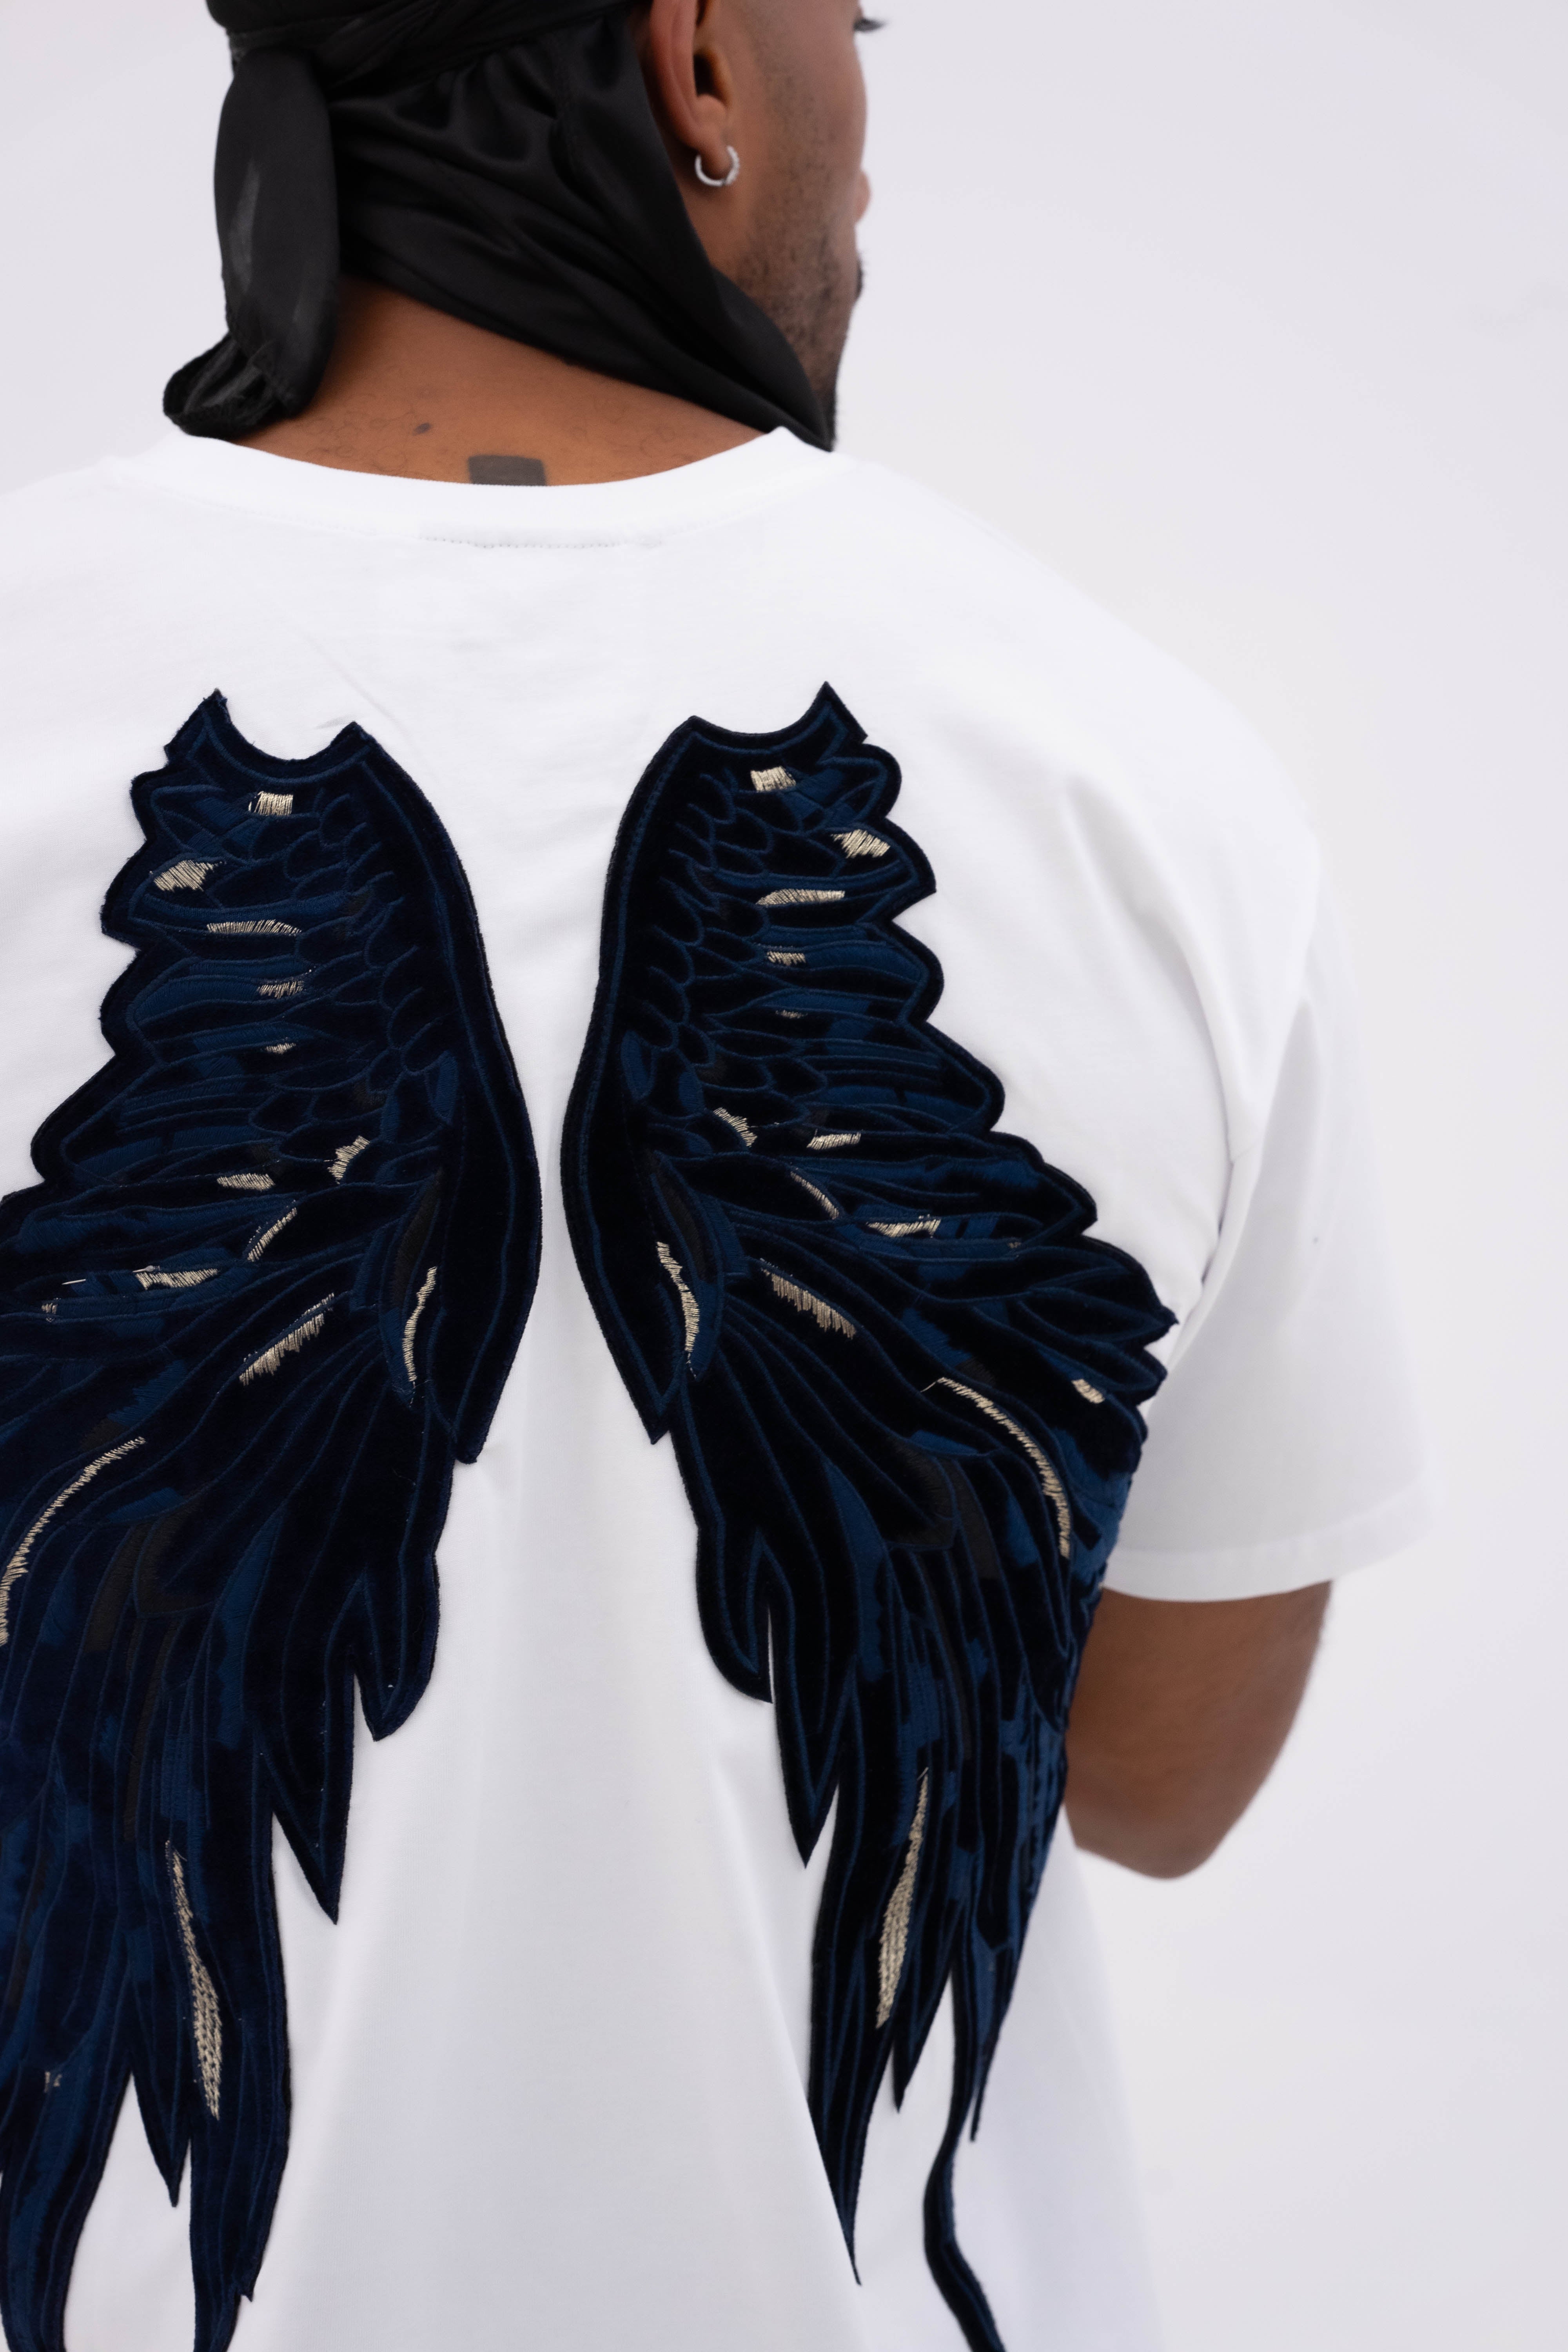 Wings Men T-Shirt